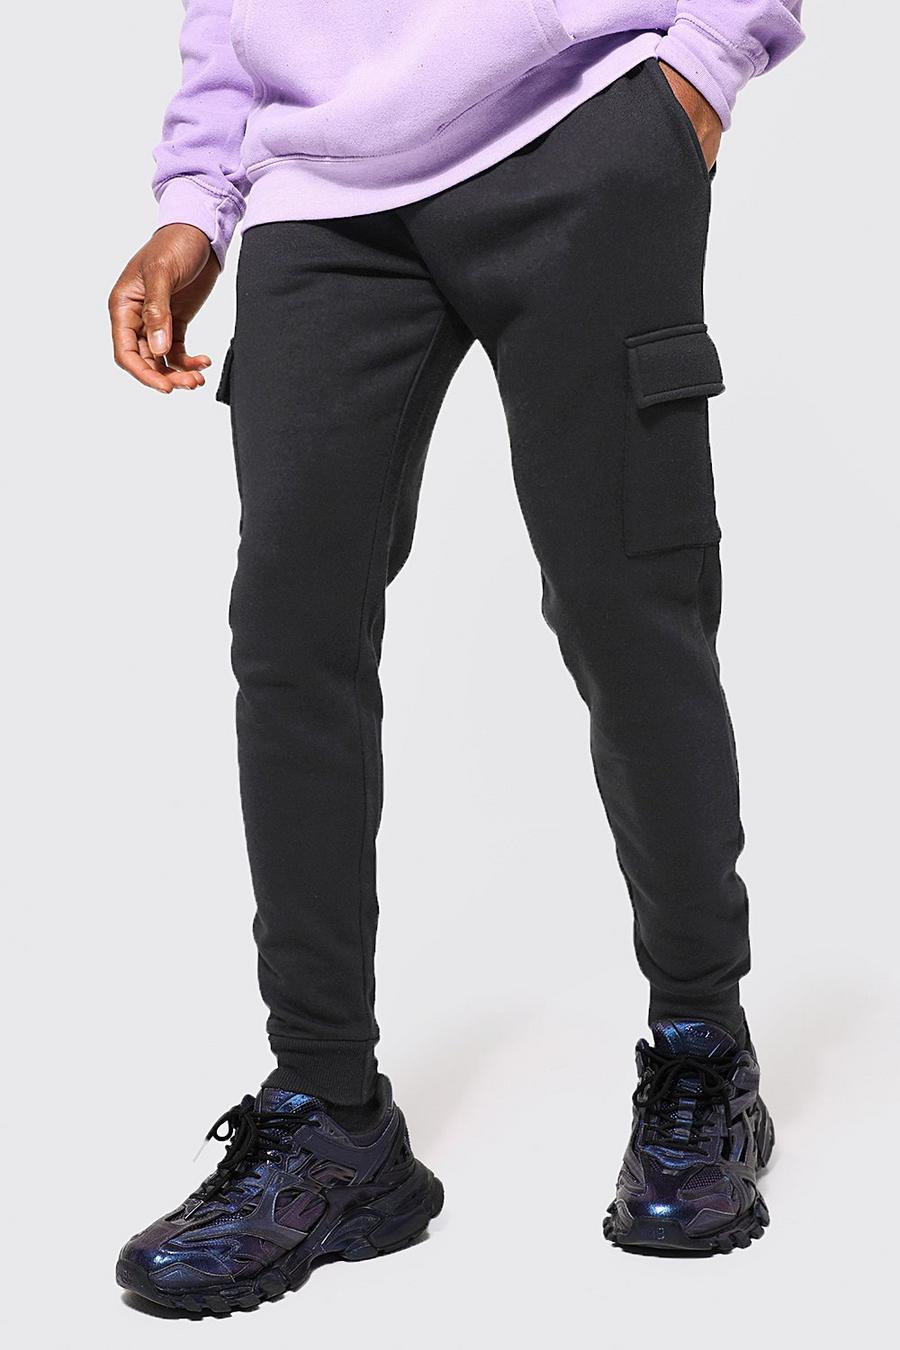 Black negro מכנסי ריצה בייסיק קרגו בגזרת סקיני עם כותנת REEL